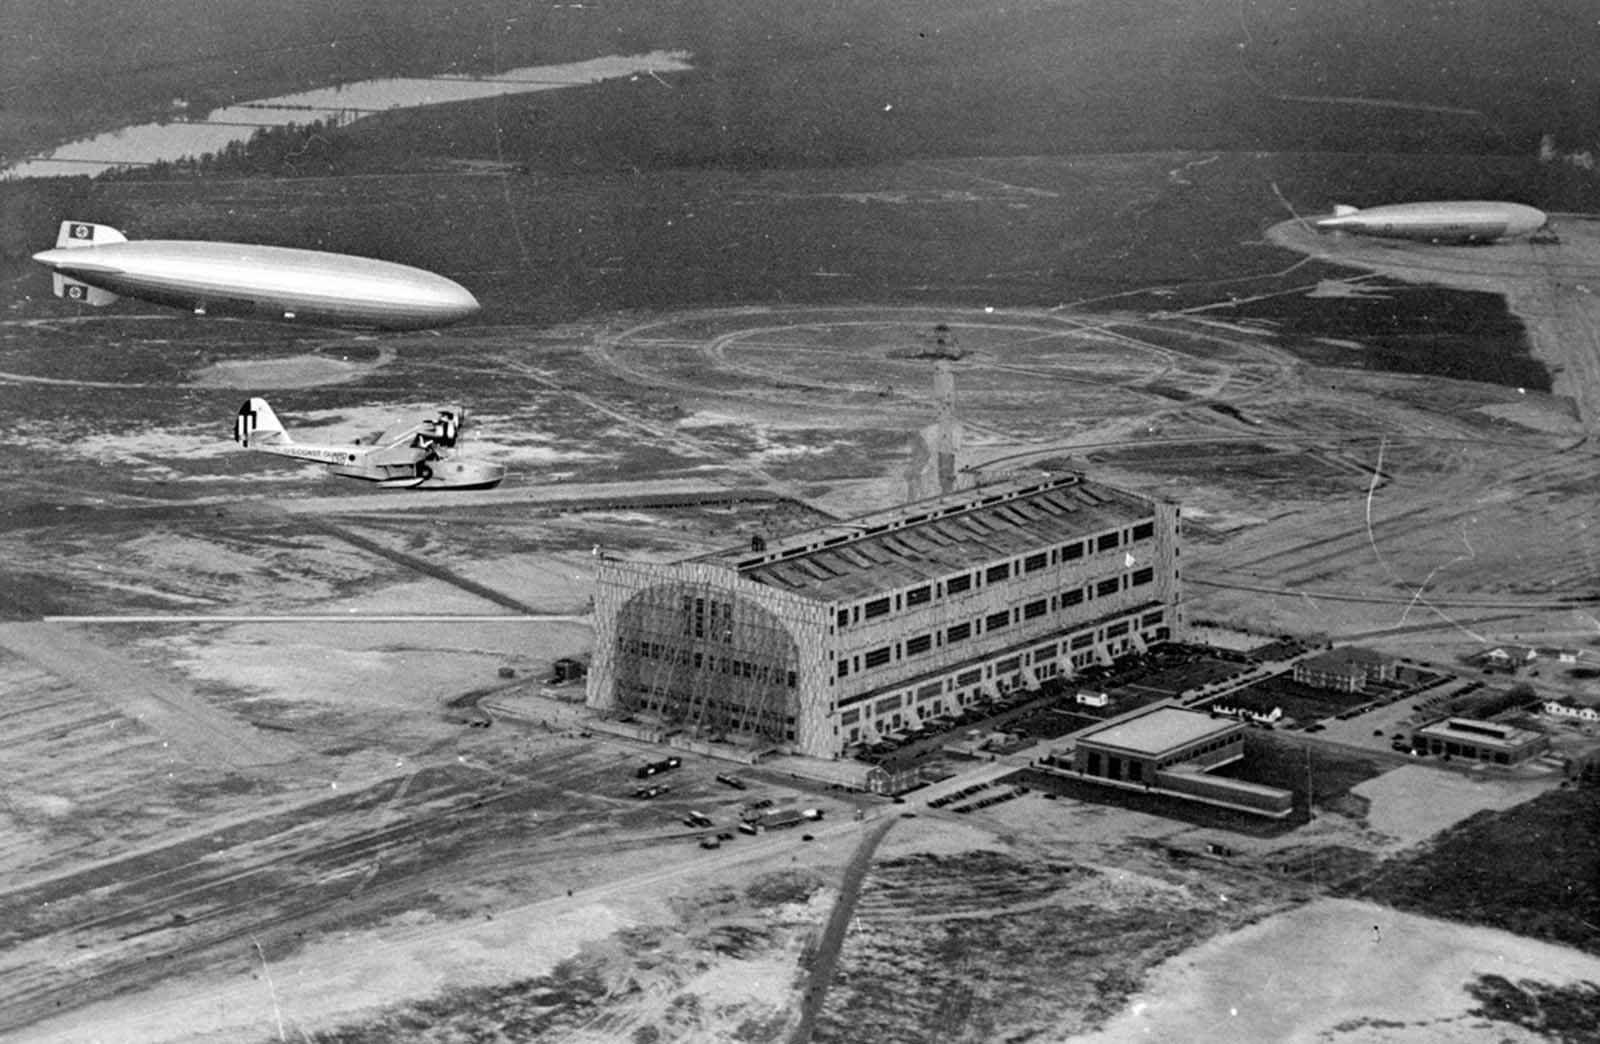 A U.S. Coast Guard plane escorts the Hindenburg to a landing at Lakehurst, New Jersey, on its inaugural flight between Freidrichshafen and Lakehurst in 1936.